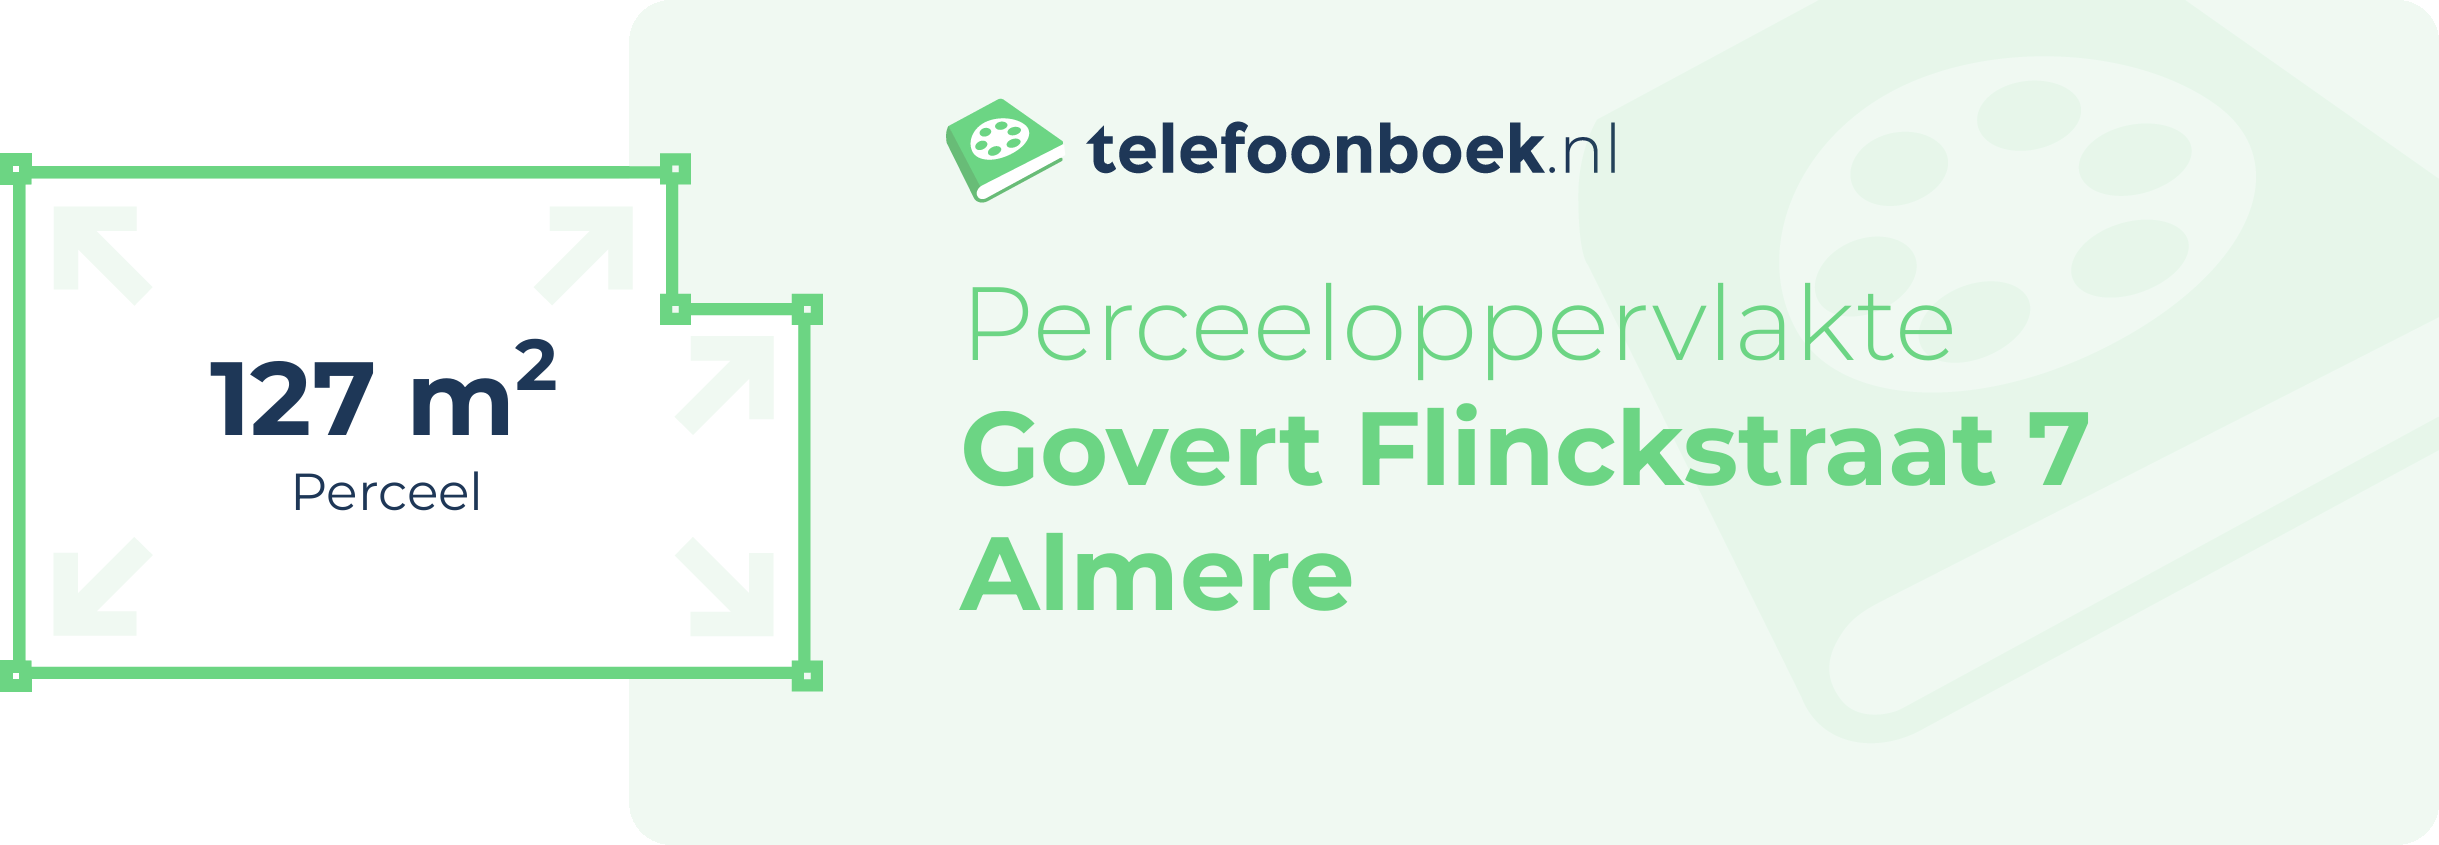 Perceeloppervlakte Govert Flinckstraat 7 Almere